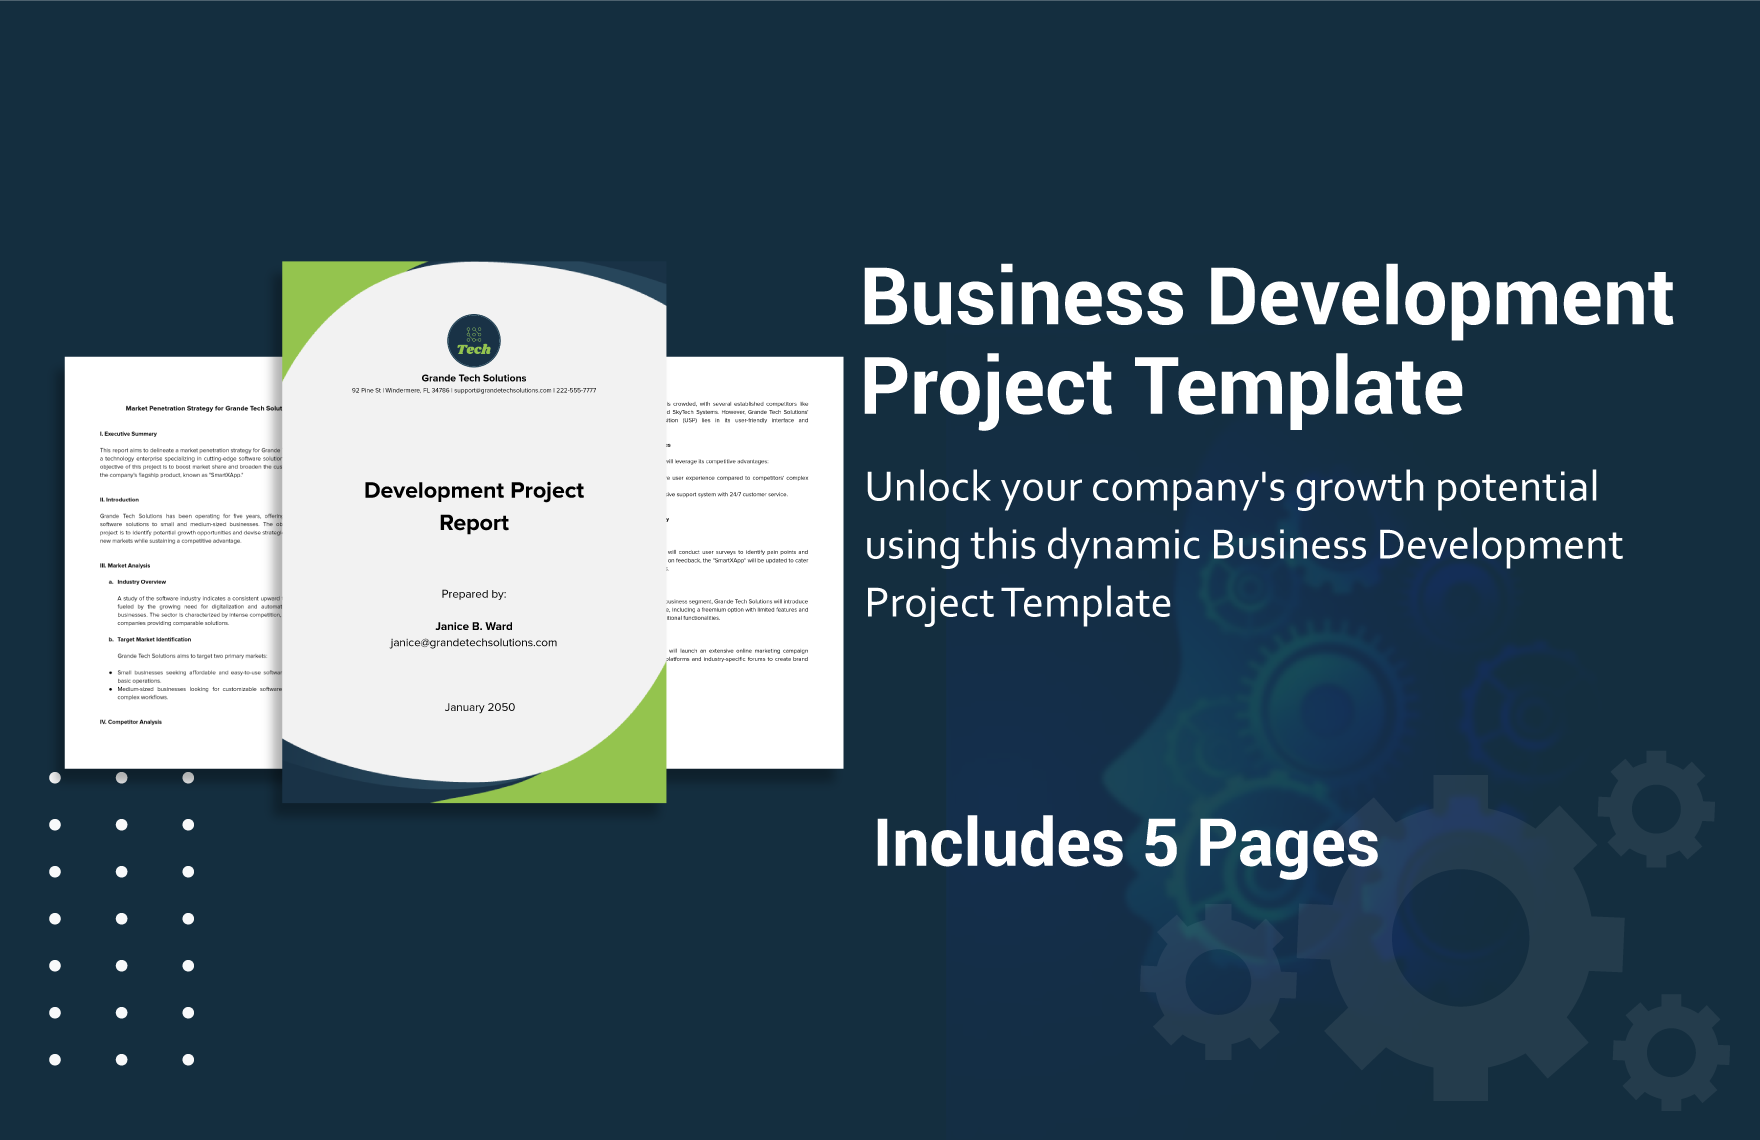 Business Development Project Template